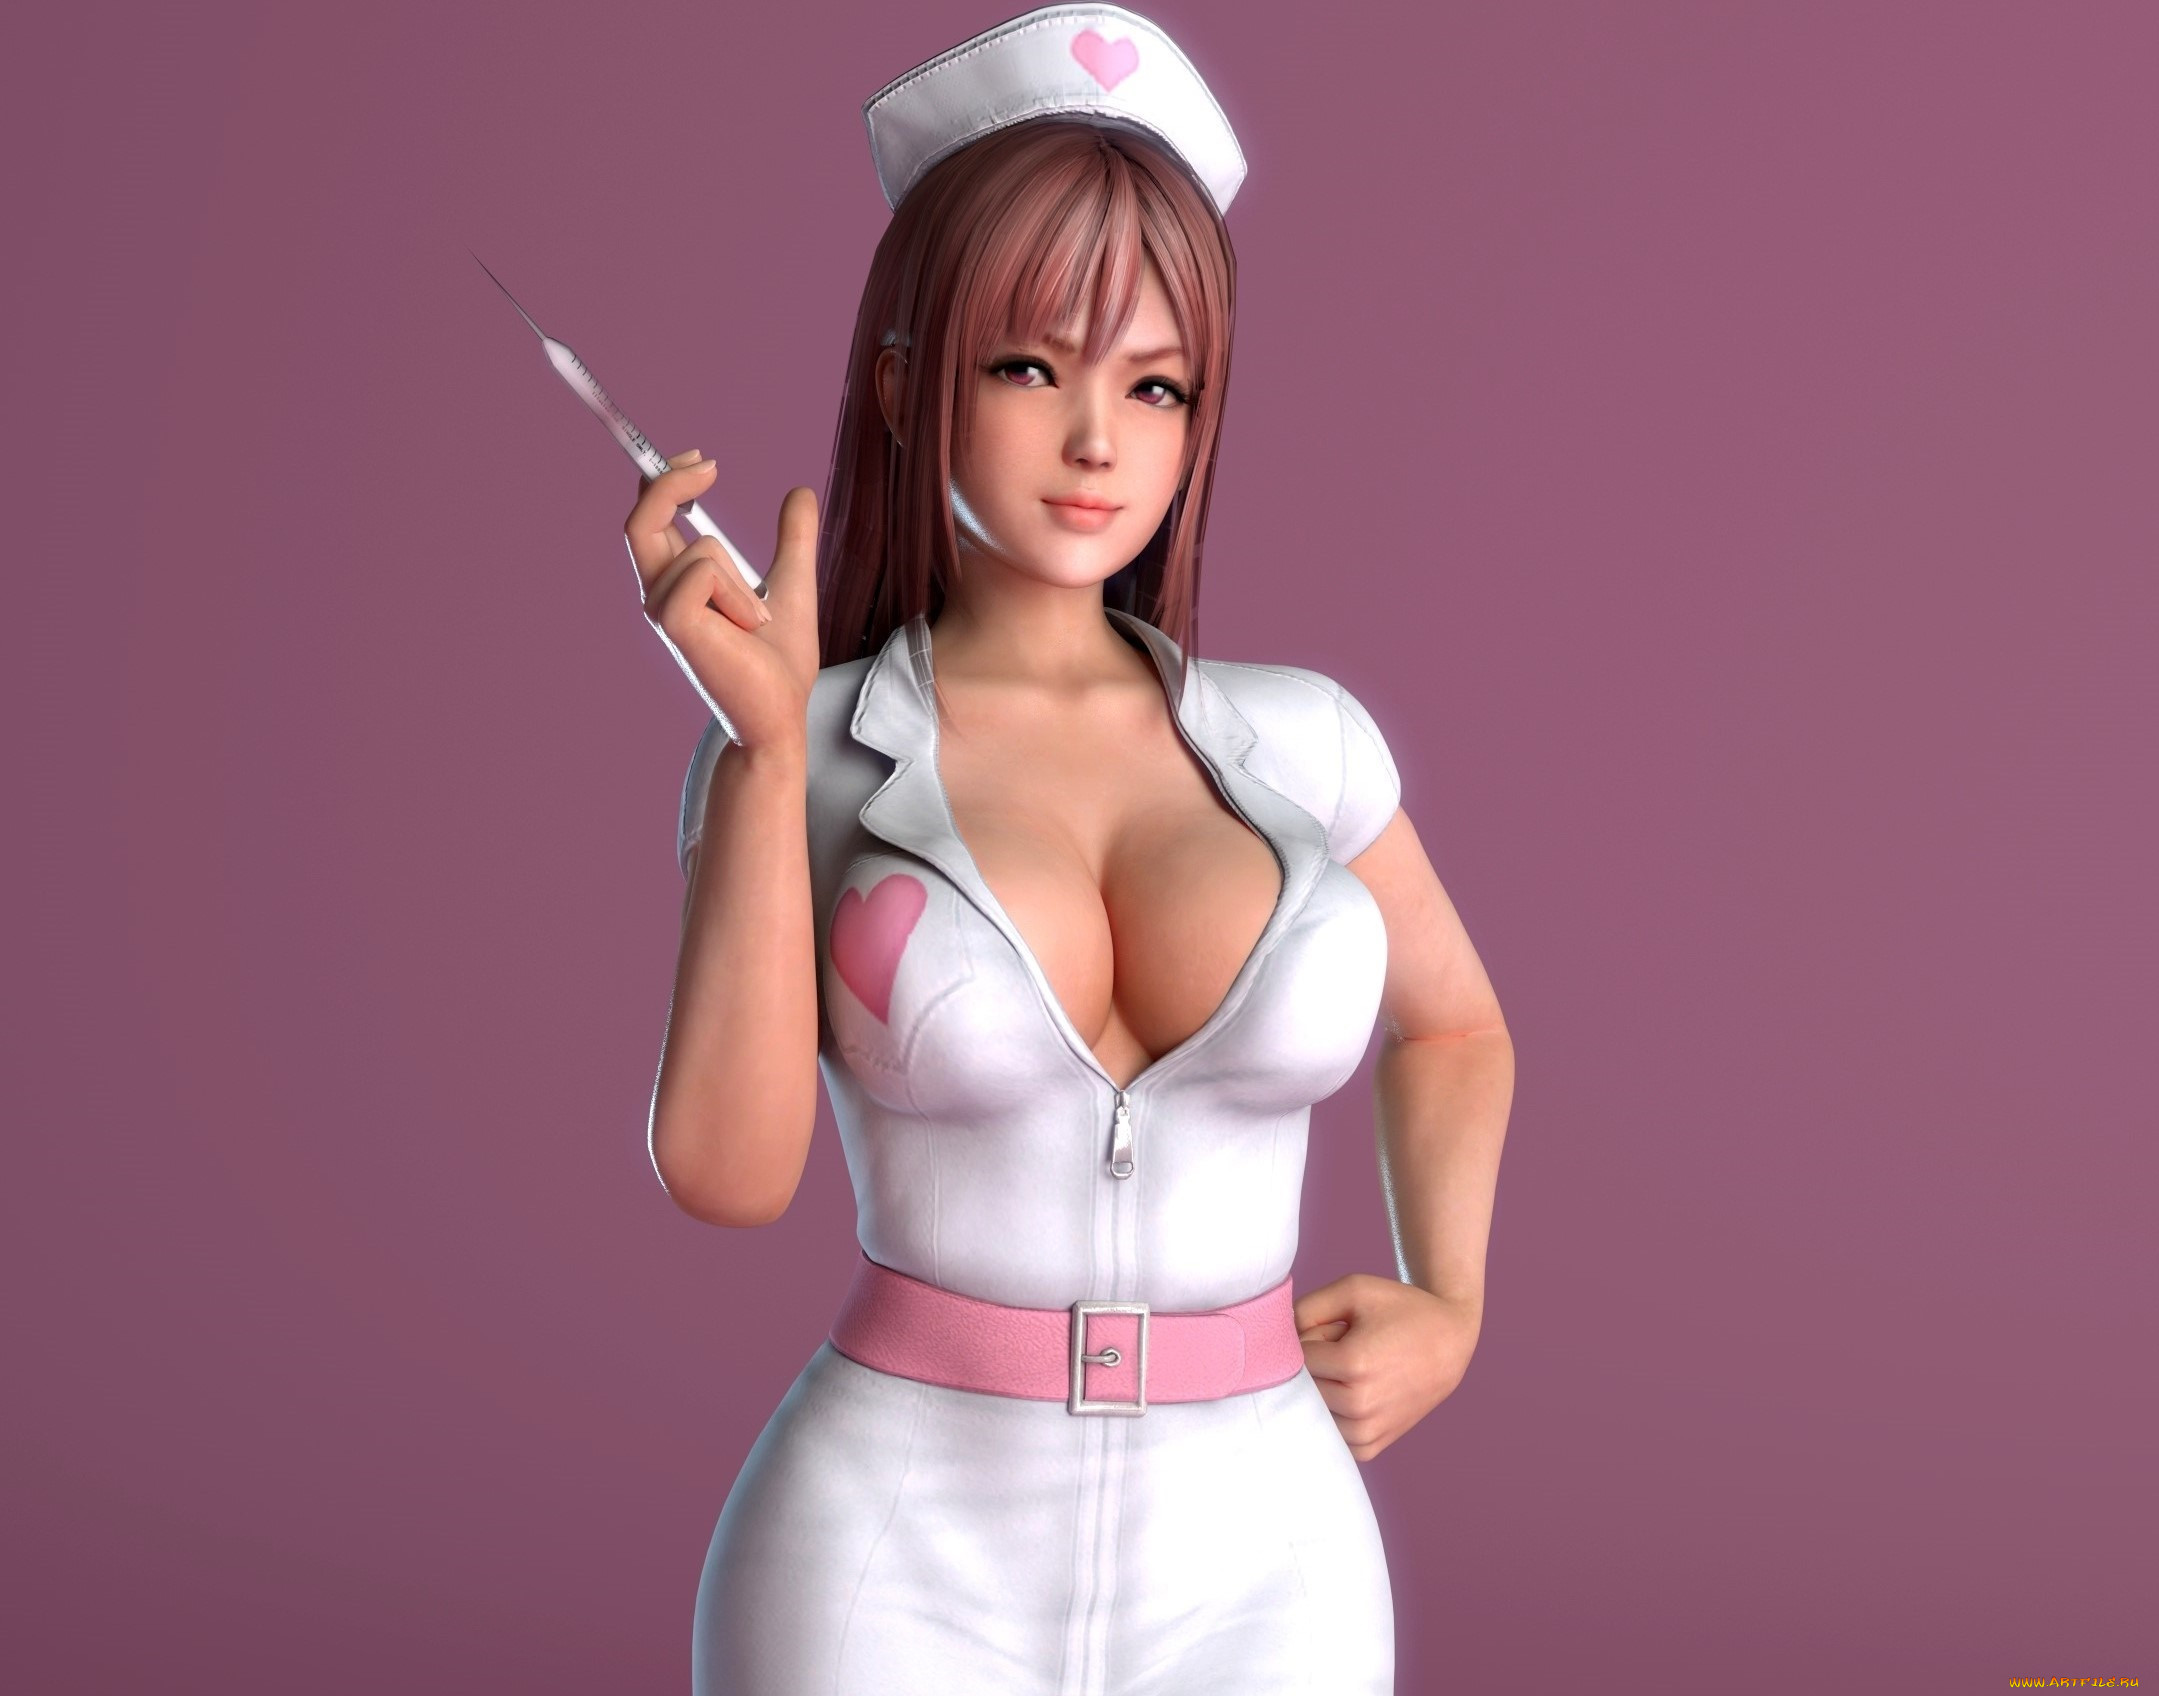 Медсестра картинки